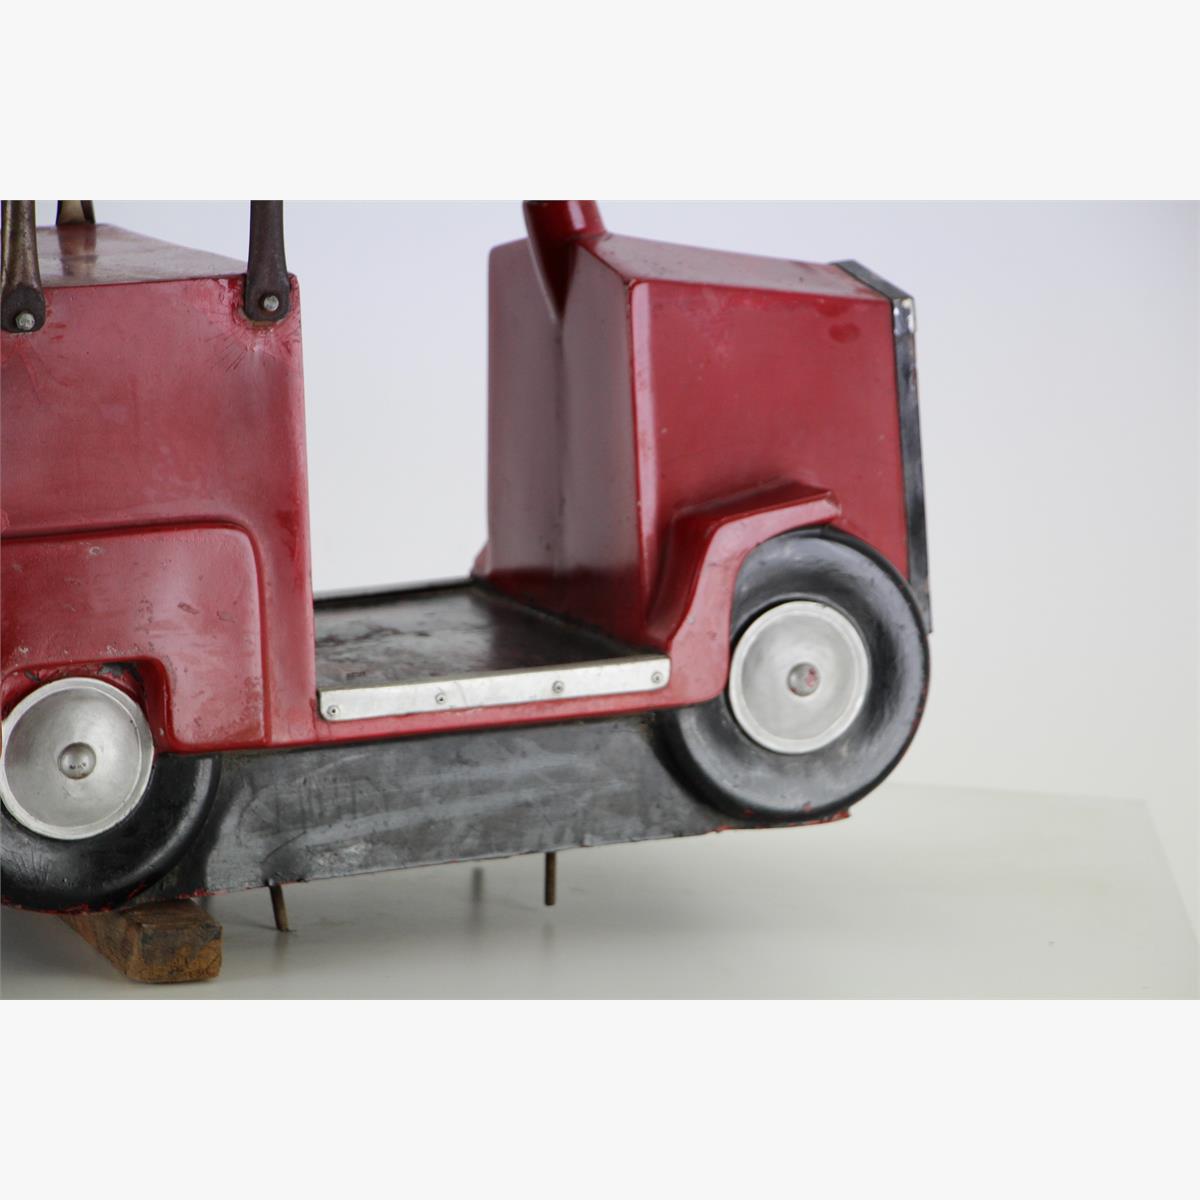 Afbeeldingen van vintage kermiswagentje brandweer bever whittaker bros shaw lancs england kiddyride